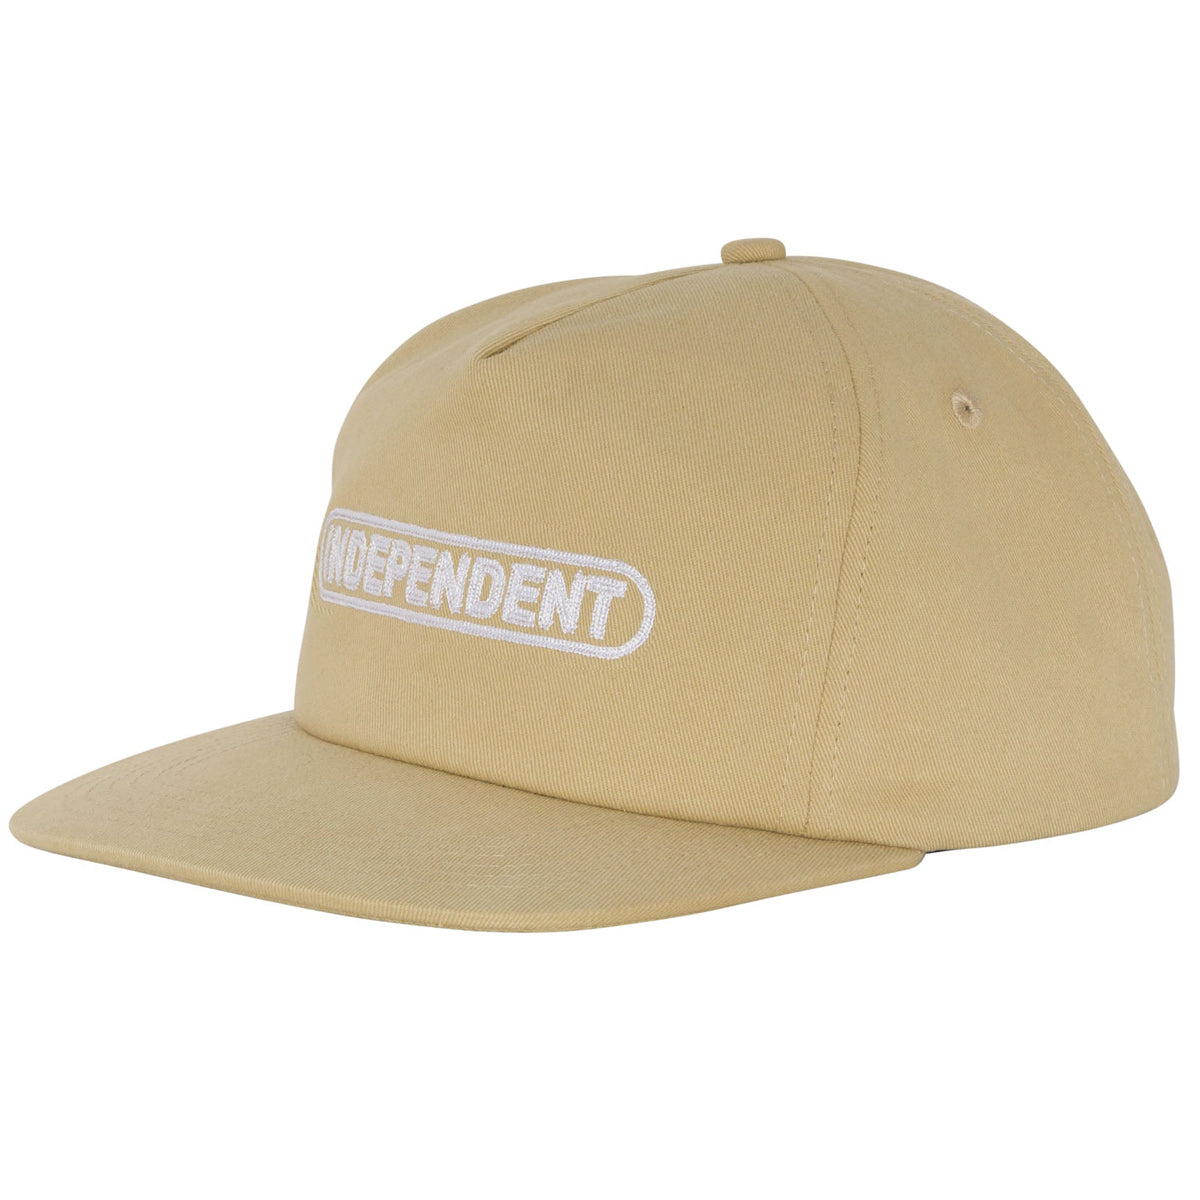 Independent Baseplate Snapback Hat - Tan image 1